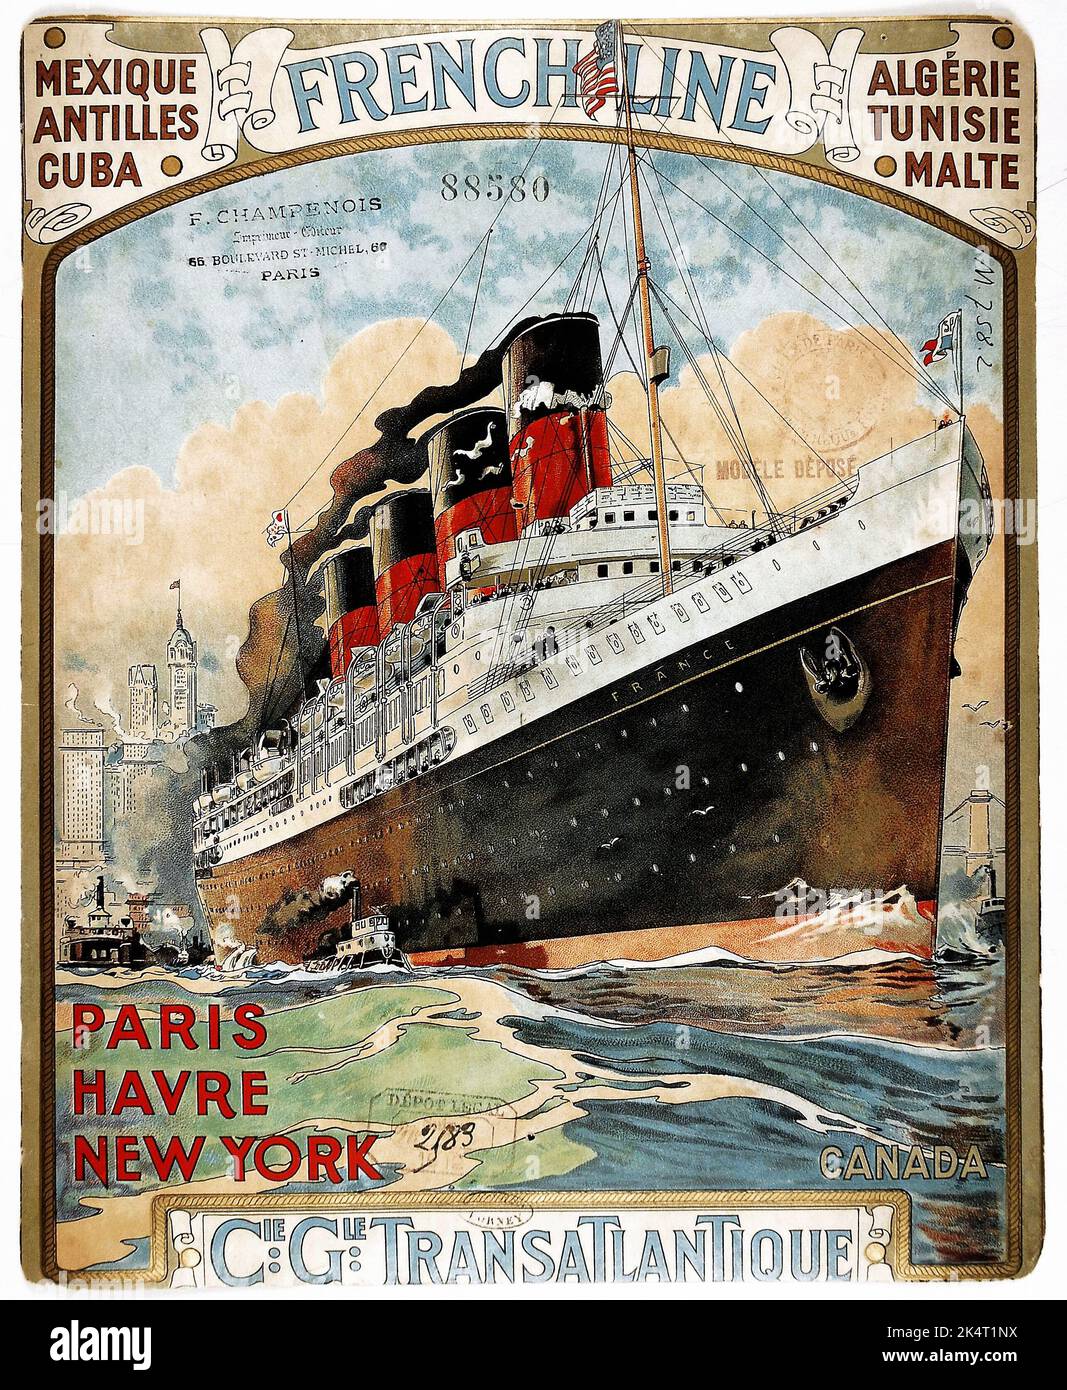 Vintager Travel Poster - French Line, Cie GLE transatlantique Paris, Havre, New York, 1912 Banque D'Images